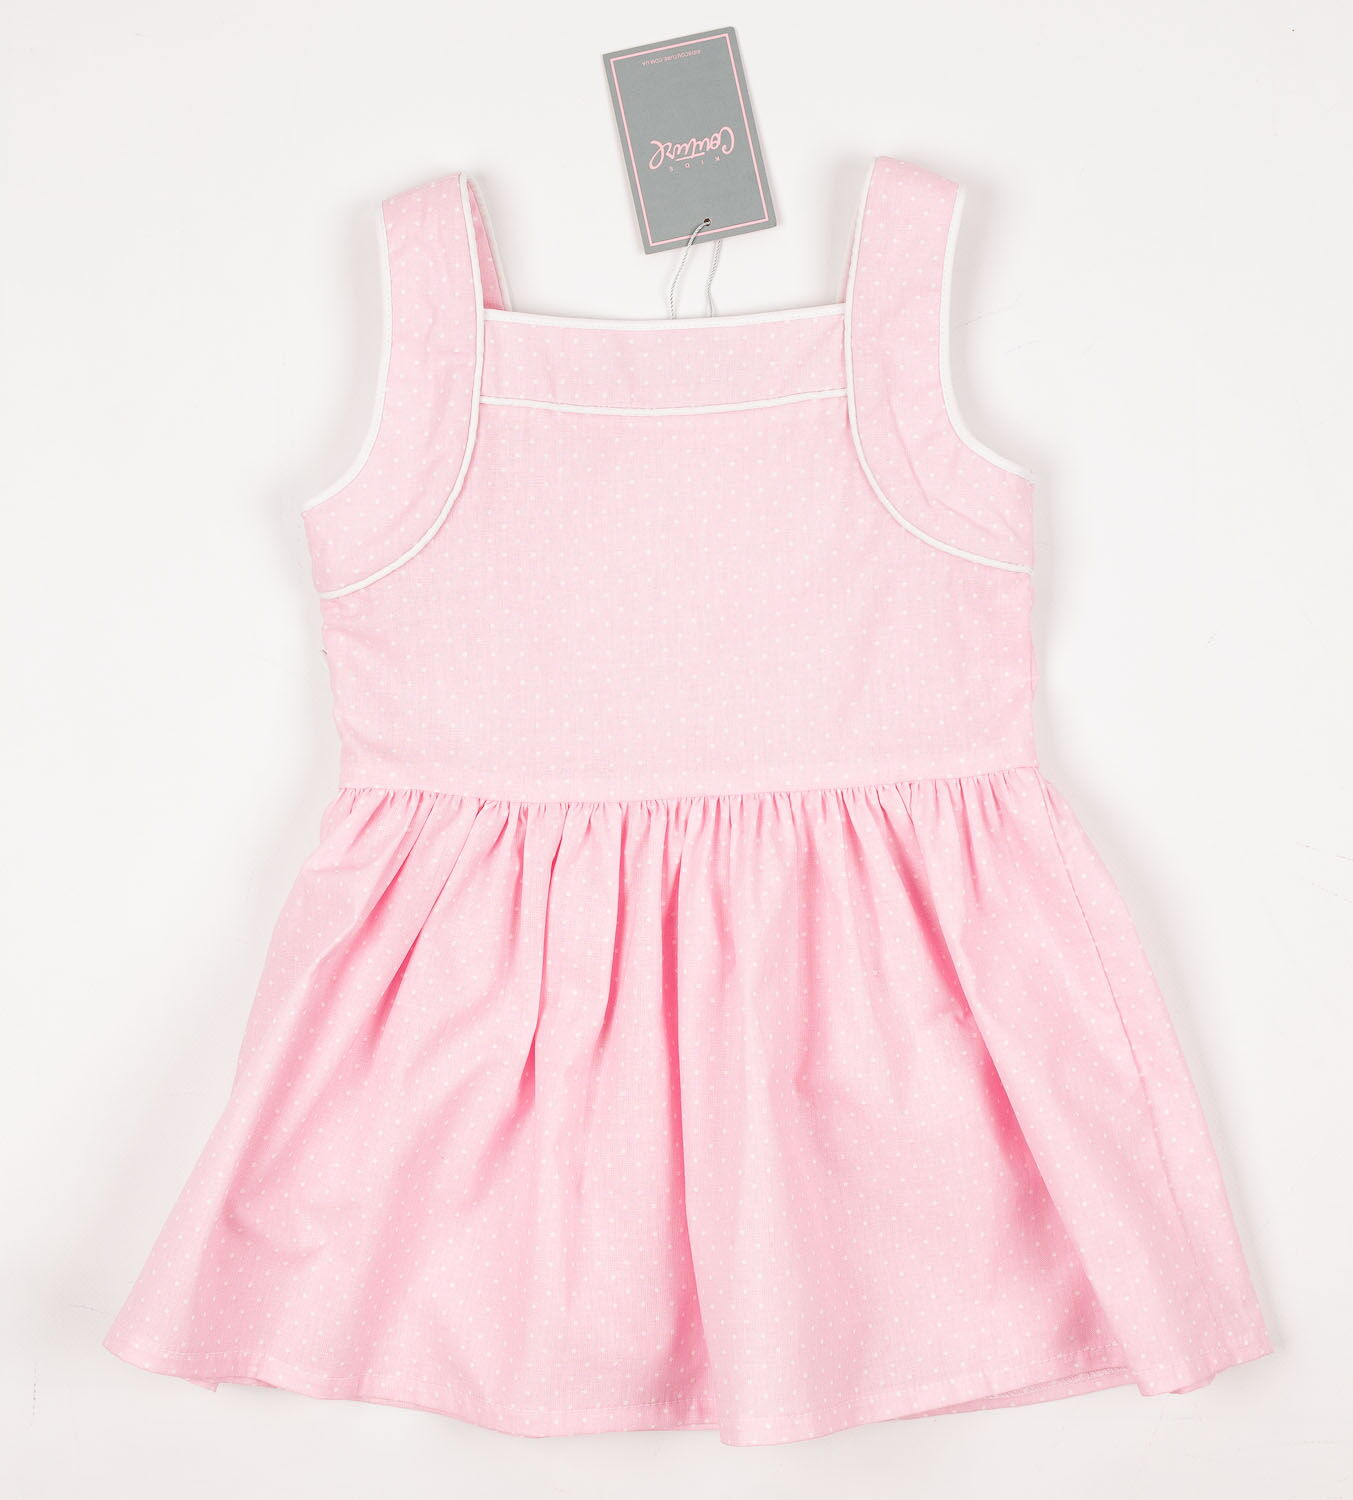 Сарафан для девочки Kids Couture розовый 61022709 - фото